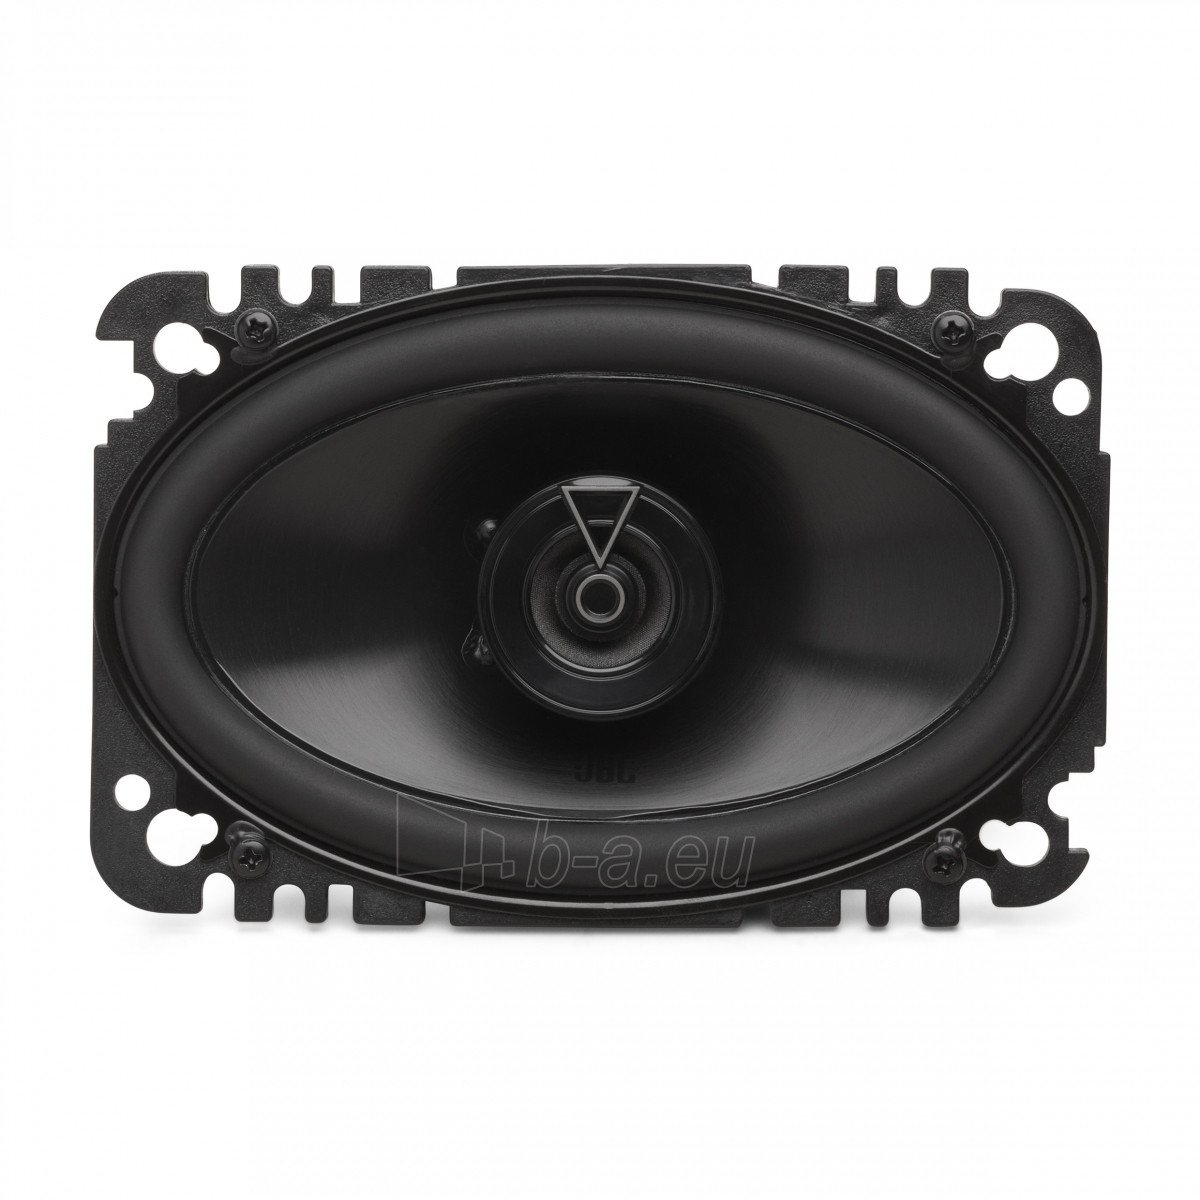 Autogarsiakalbiai JBL Club 644F 10cm x 15,2cm 2-Way Coaxial Car Speaker paveikslėlis 8 iš 10